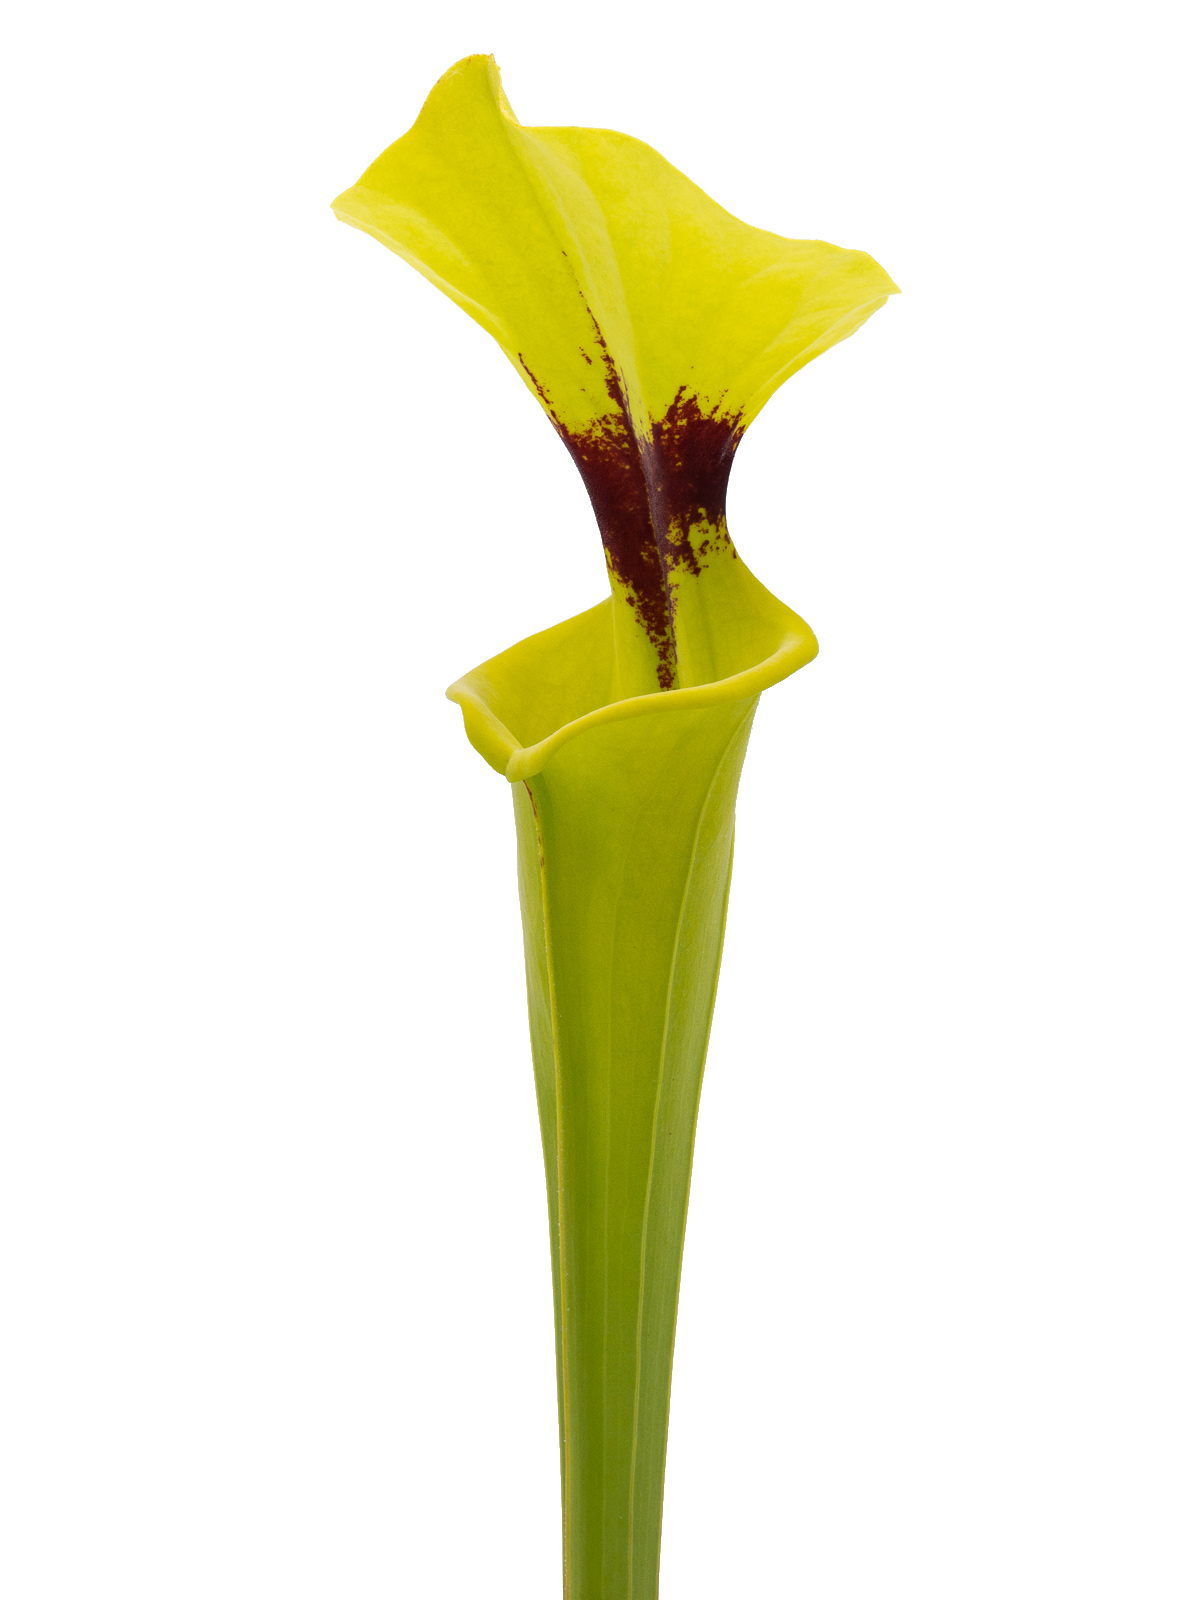 Sarracenia flava var. rugelii - MK F146, large pitcher